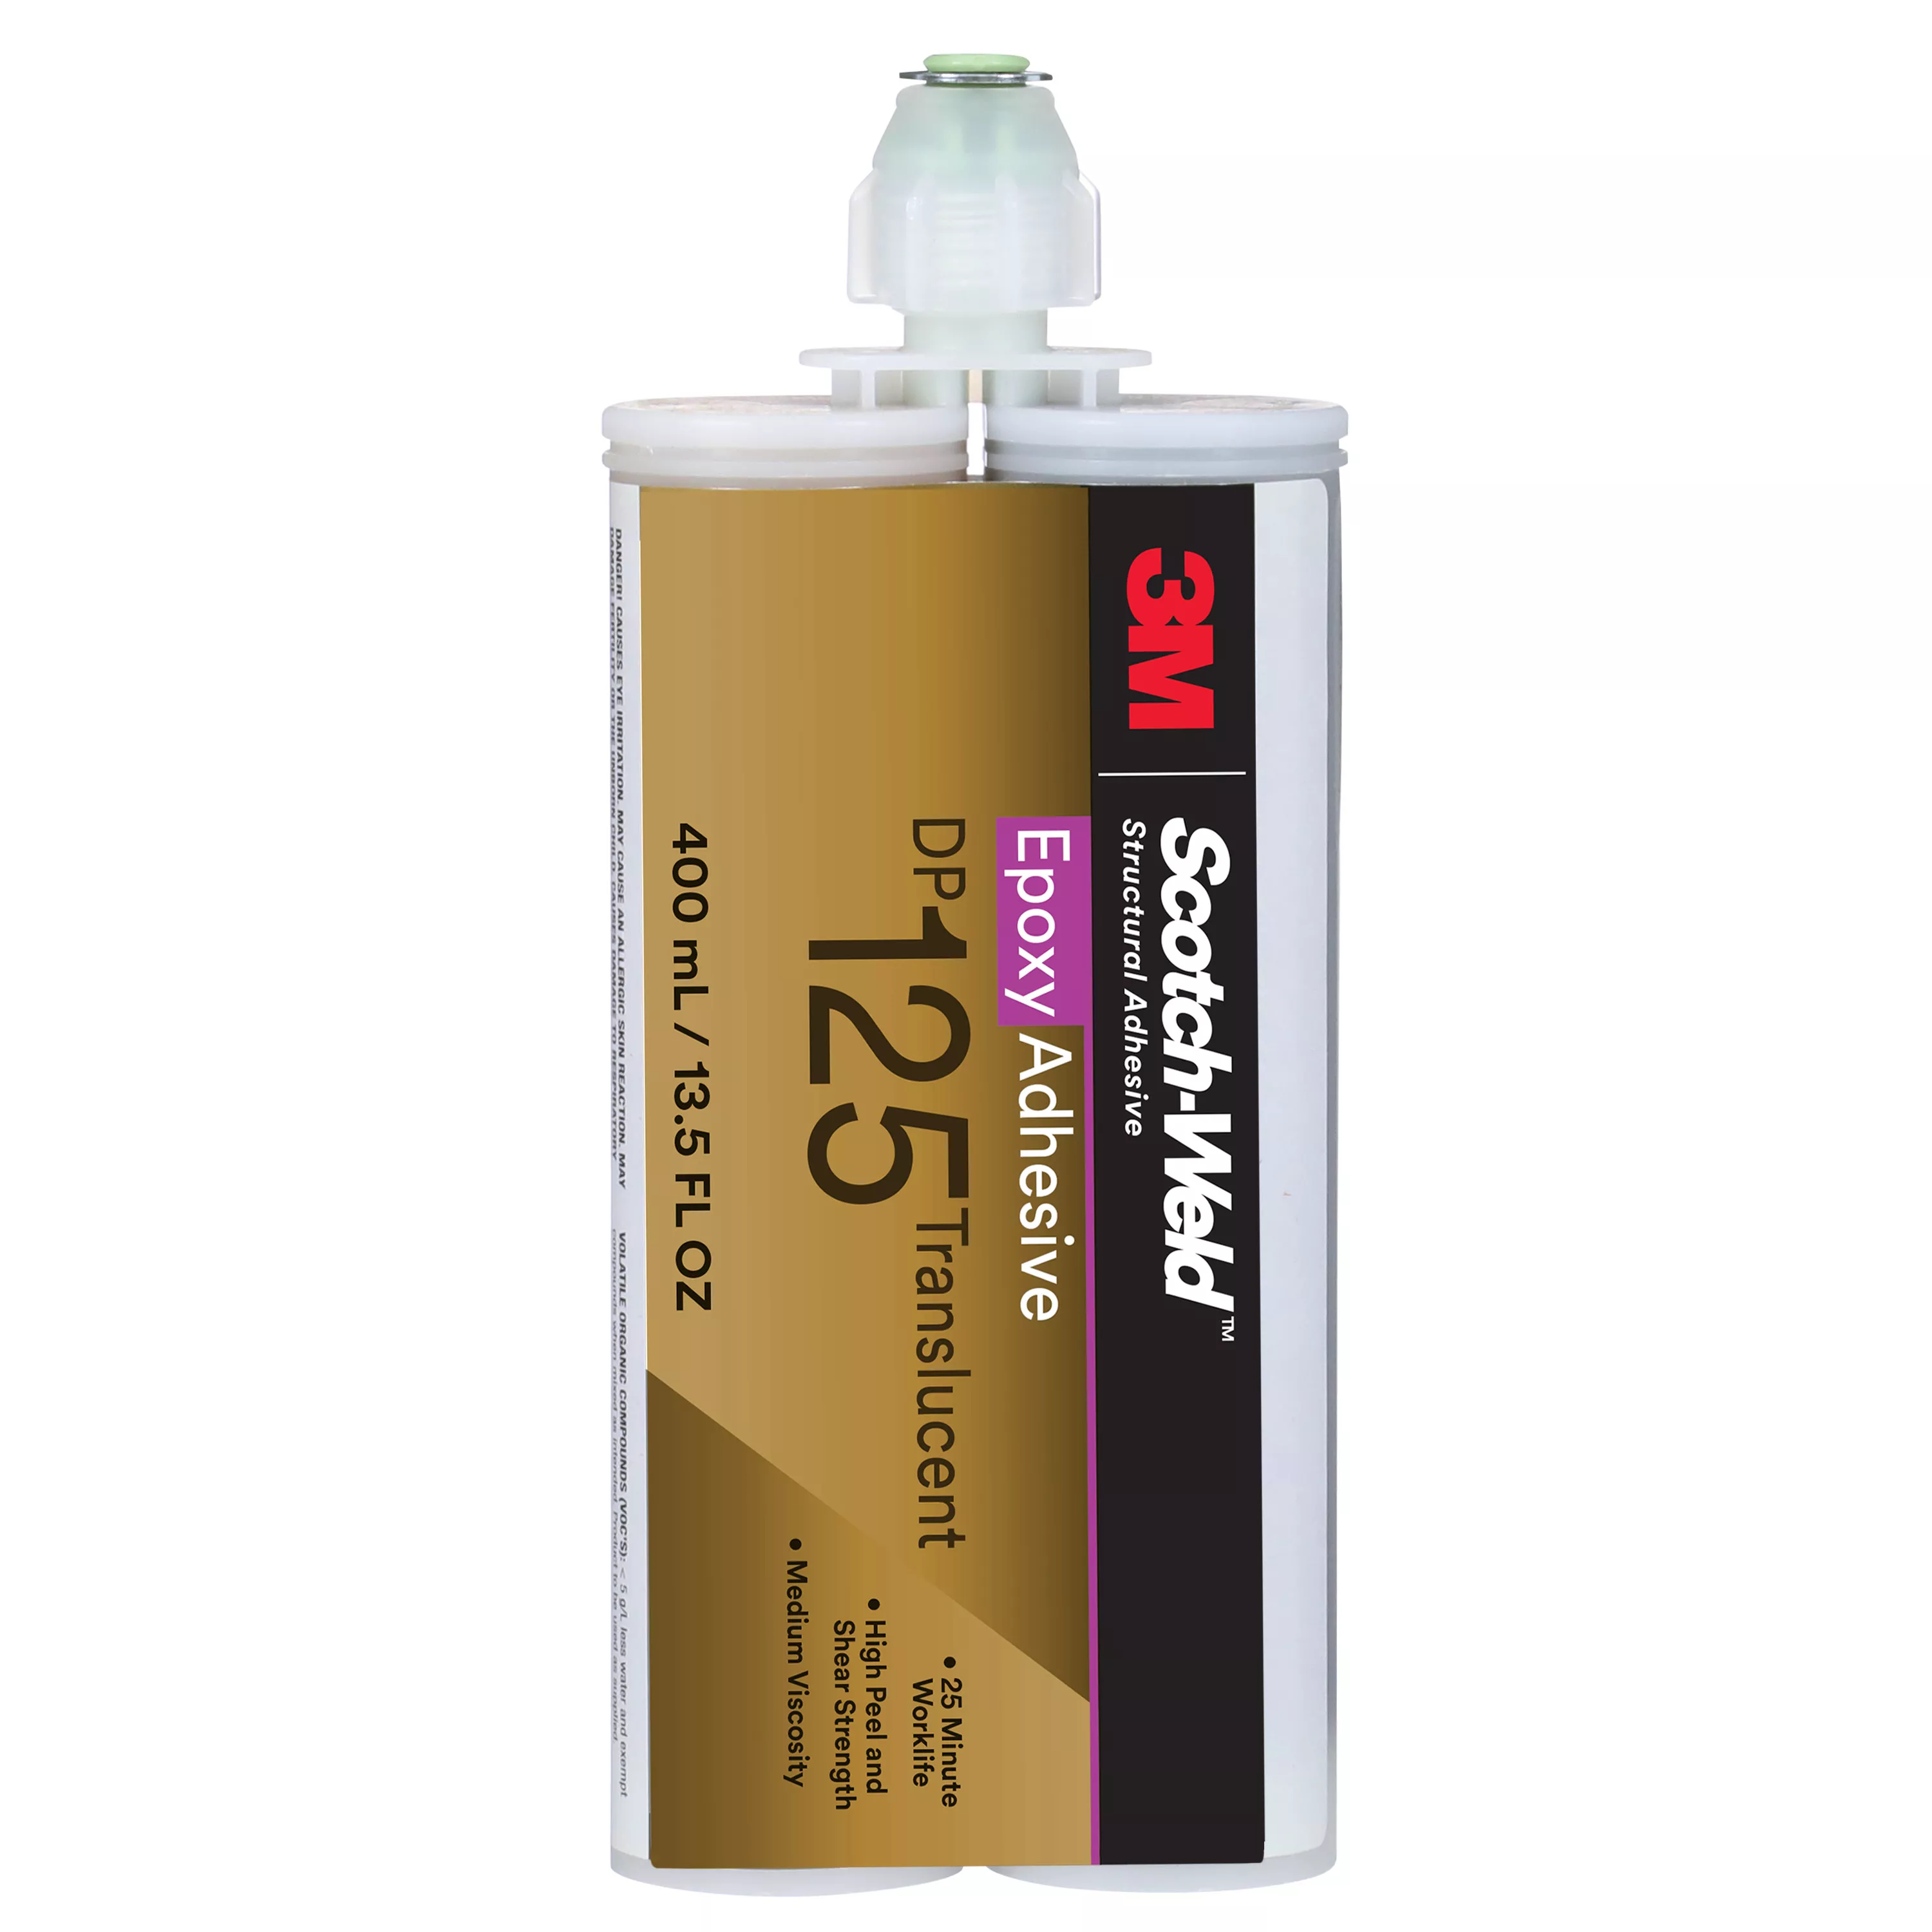 3M™ Scotch-Weld™ Epoxy Adhesive DP125, Translucent, 400 mL Duo-Pak, 6
Pack/Case